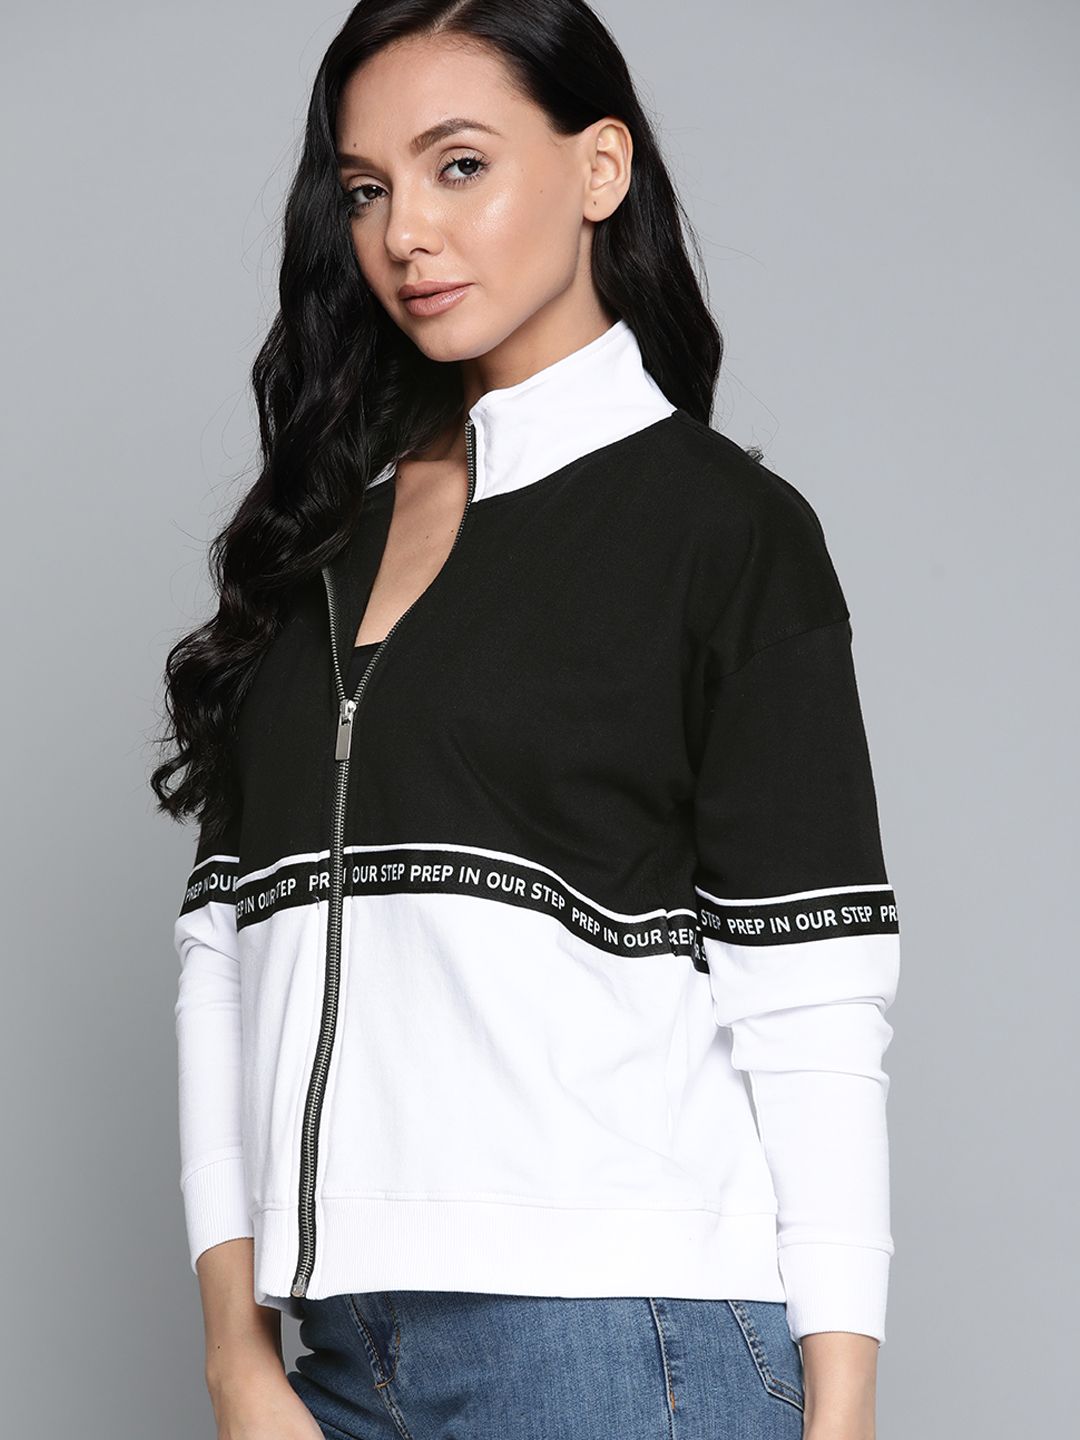 Harvard Women Black & White Colourblocked Sweatshirt Price in India